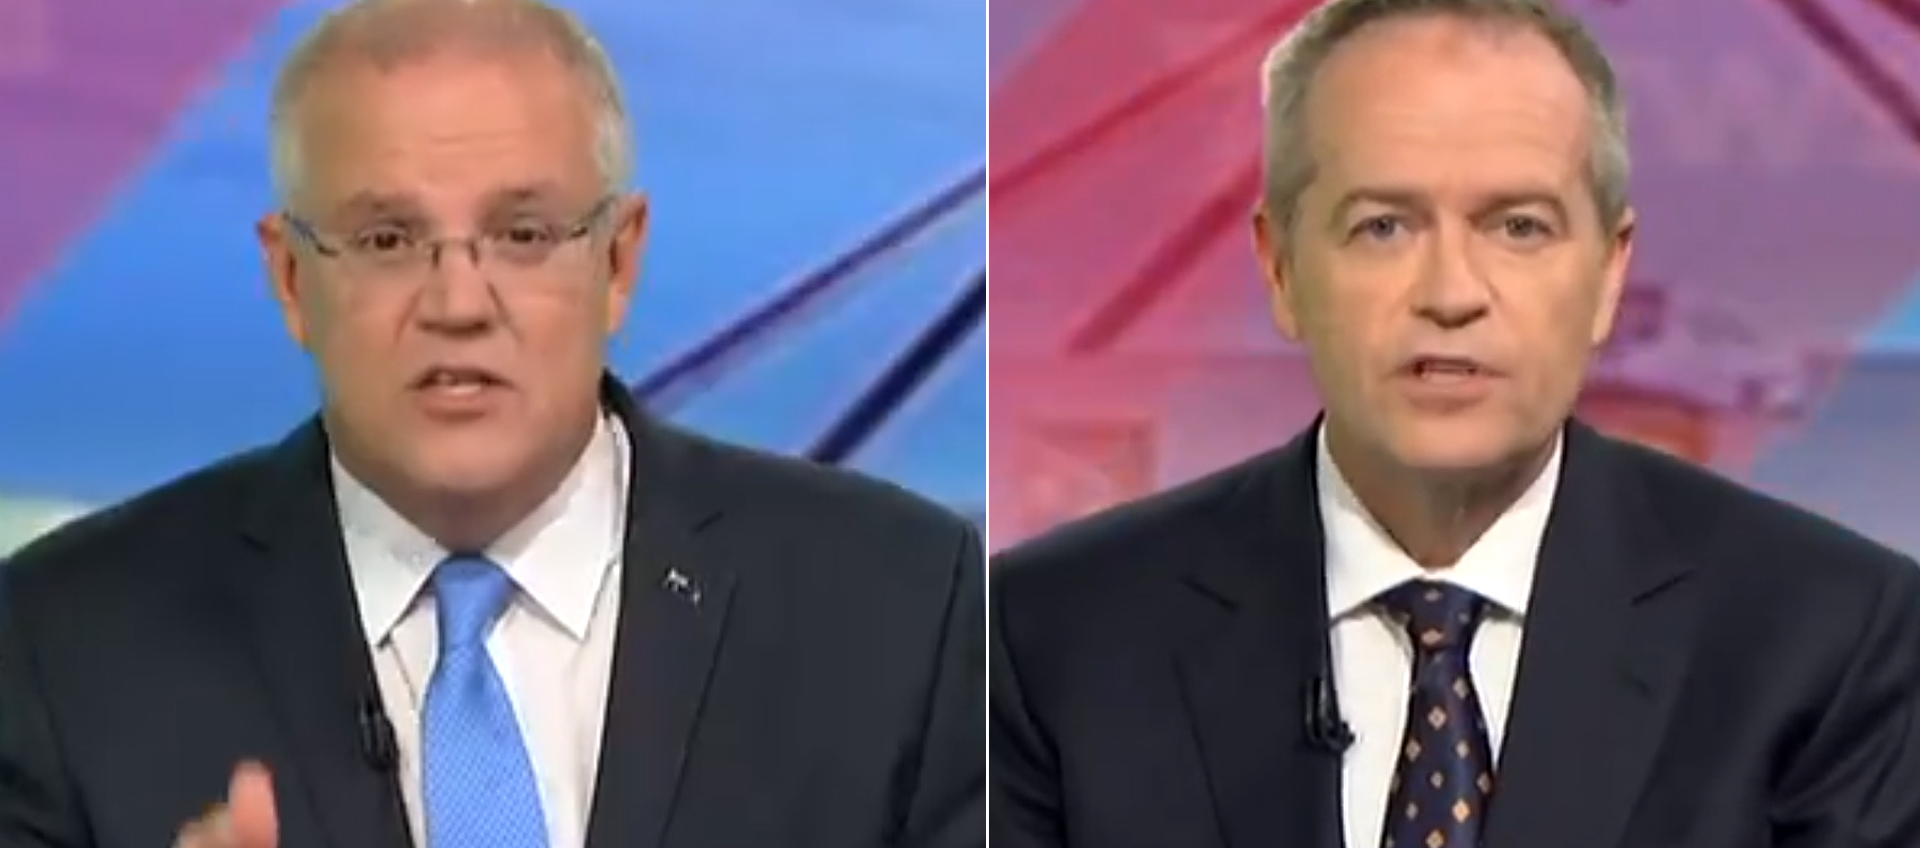 Scott Morrison and Bill Shorten square off in last night's leaders debate in Perth.